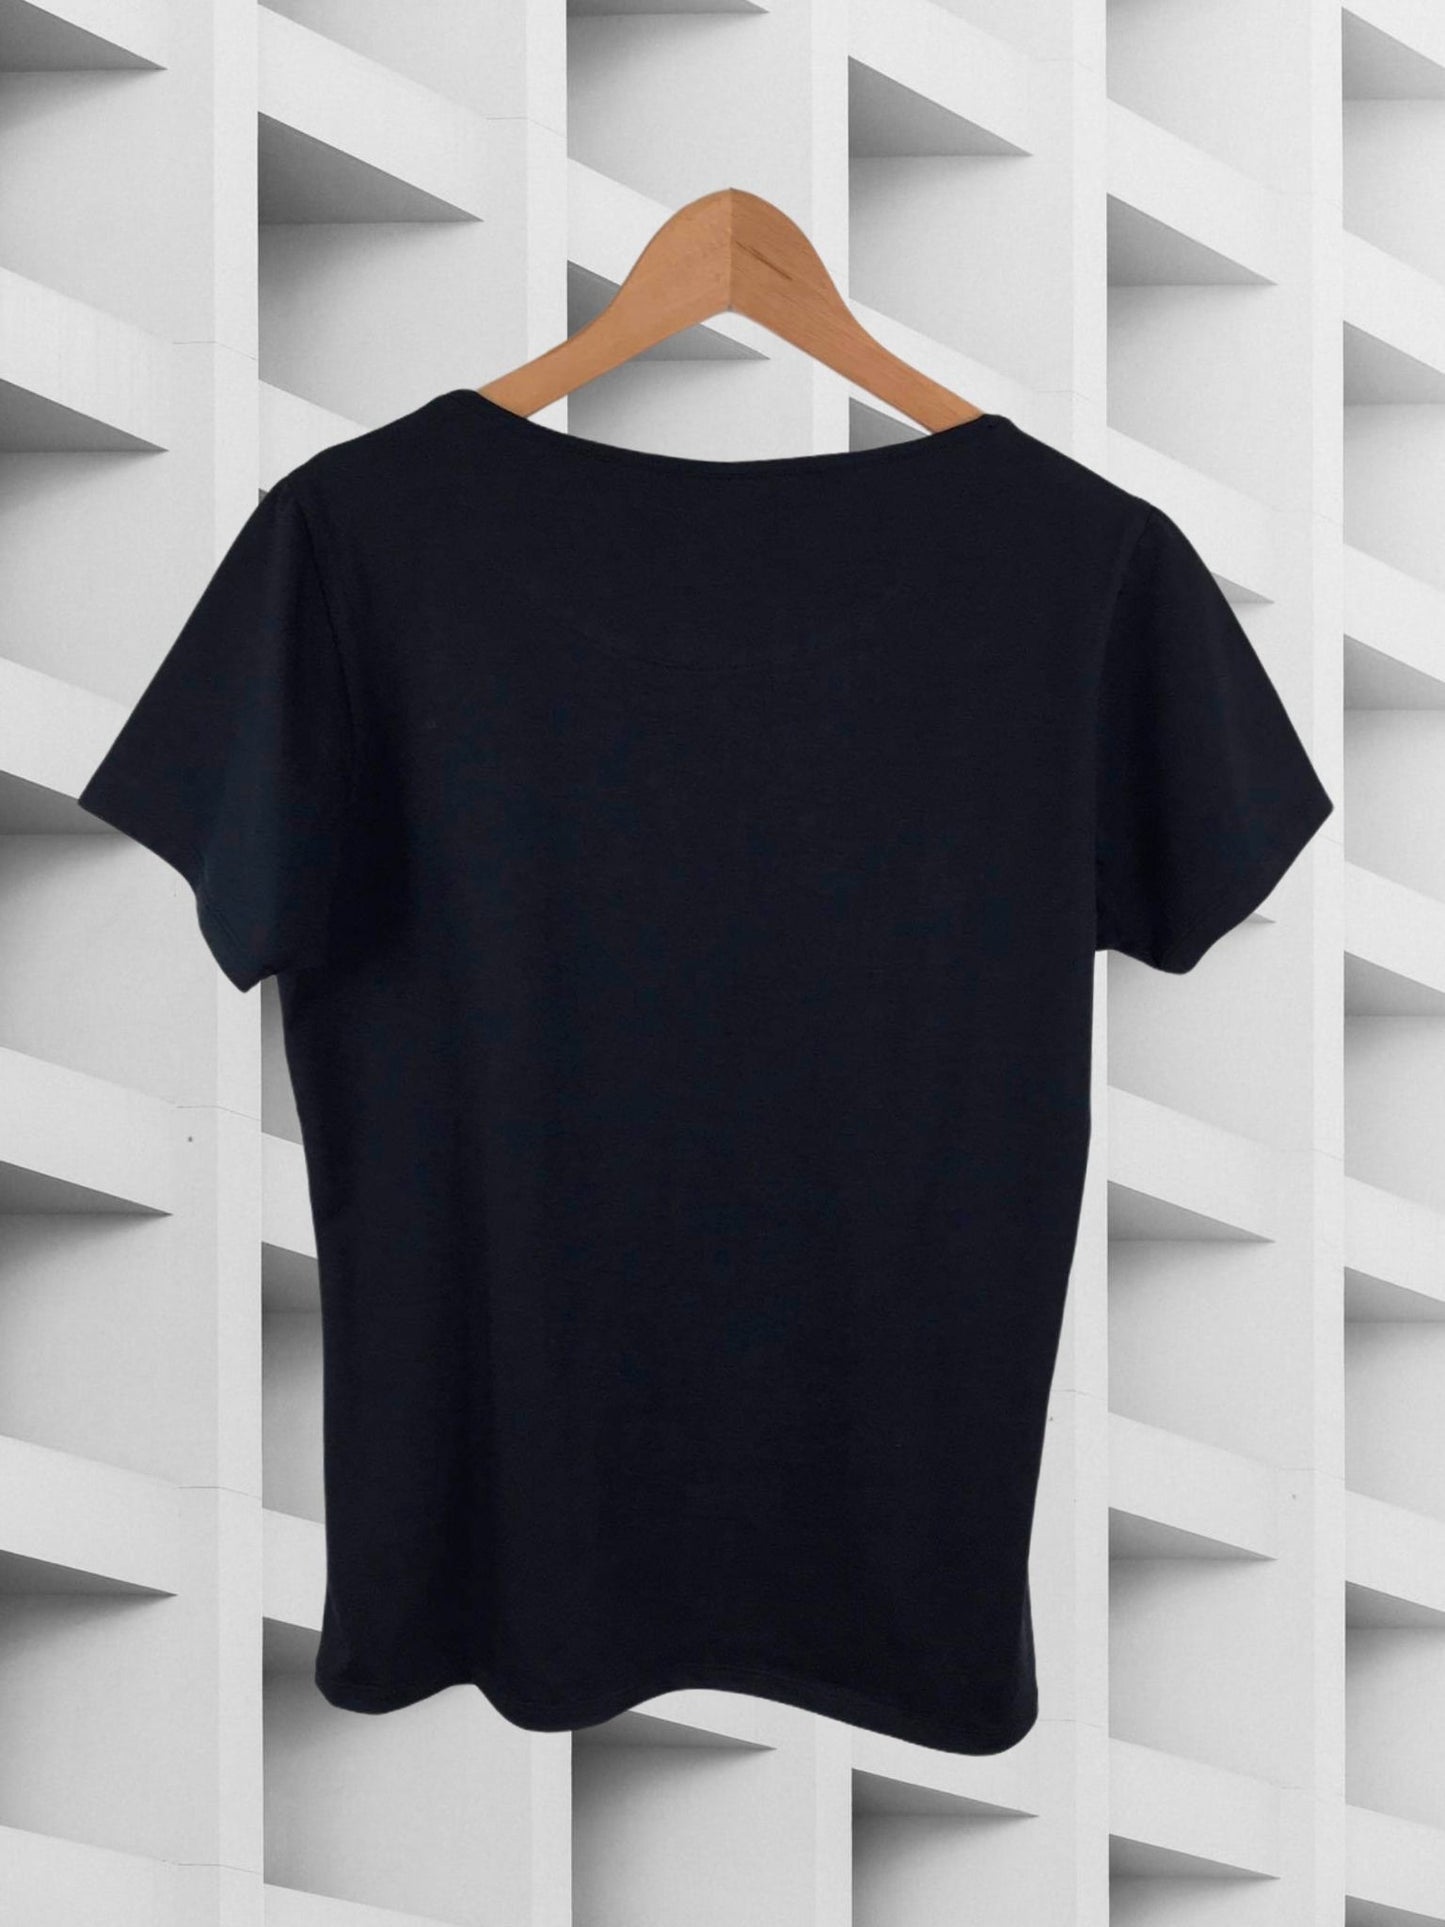 Elba Black cotton T-shirt